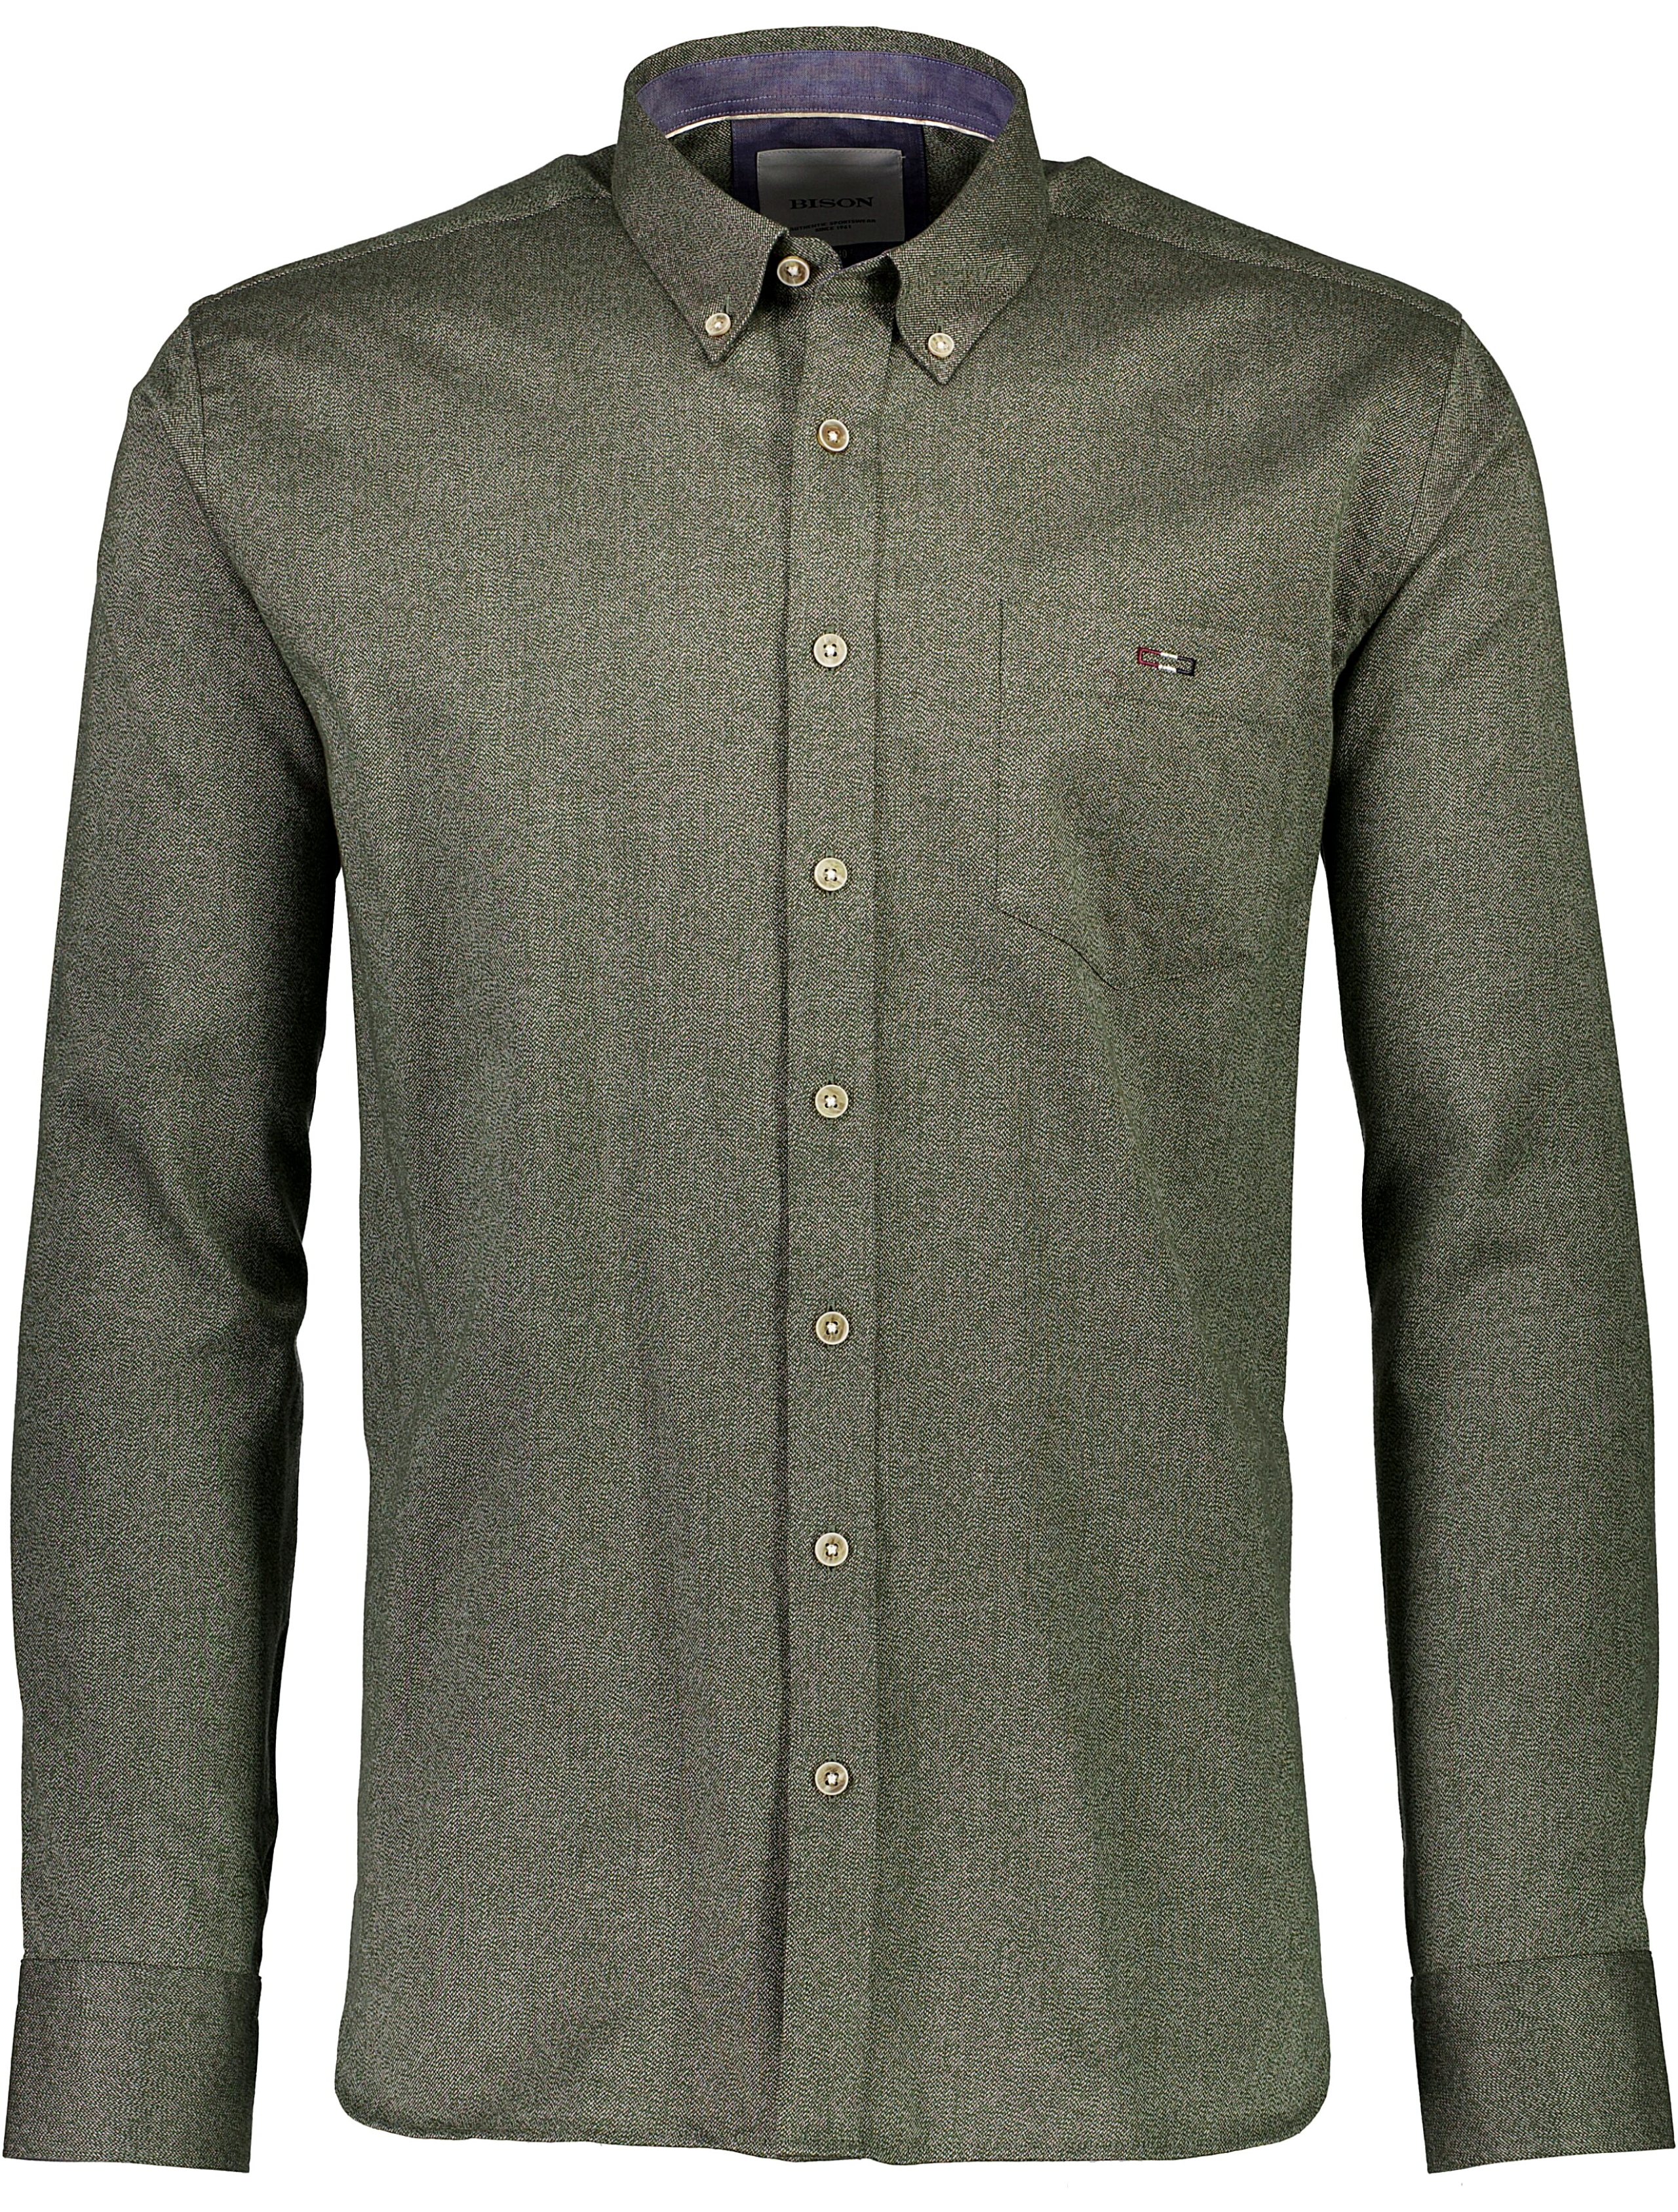 Bison Casual skjorta grön / army